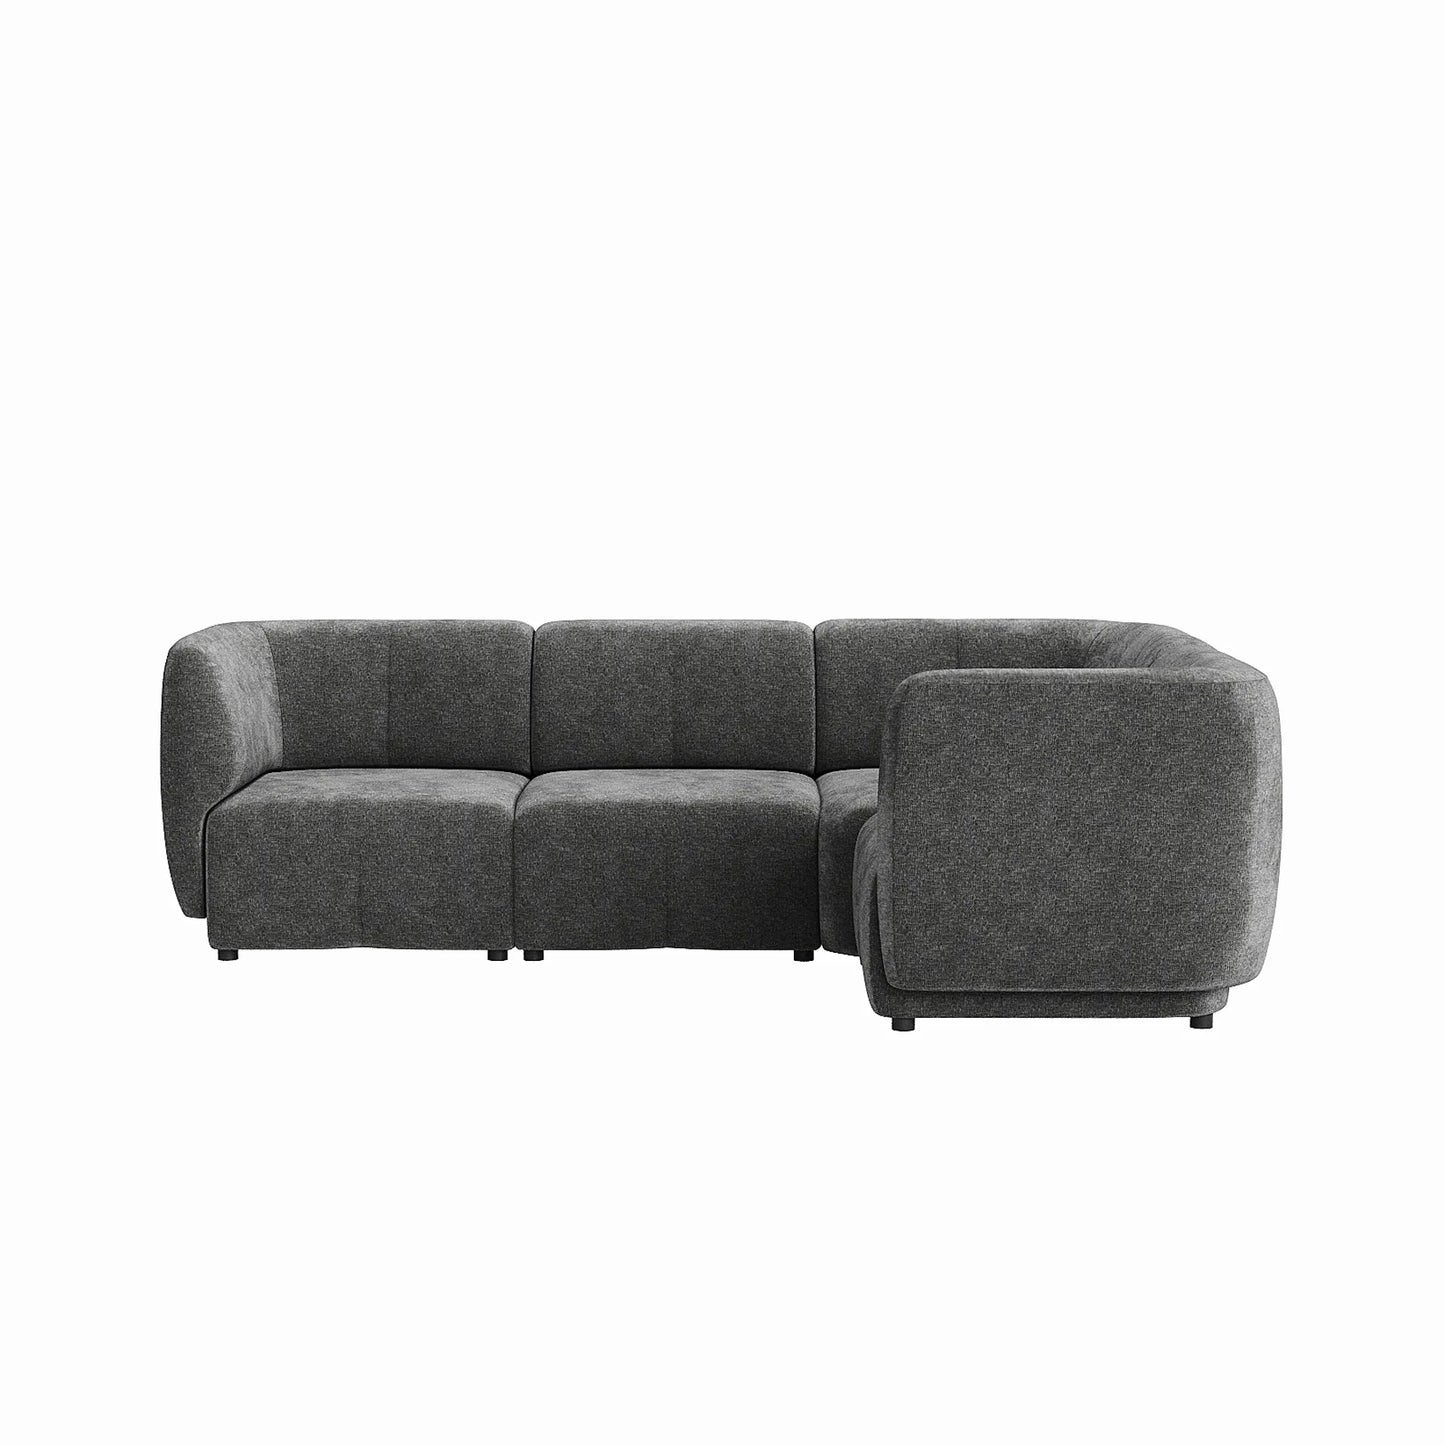 Plum RHF Chaise Sofa - City Grey